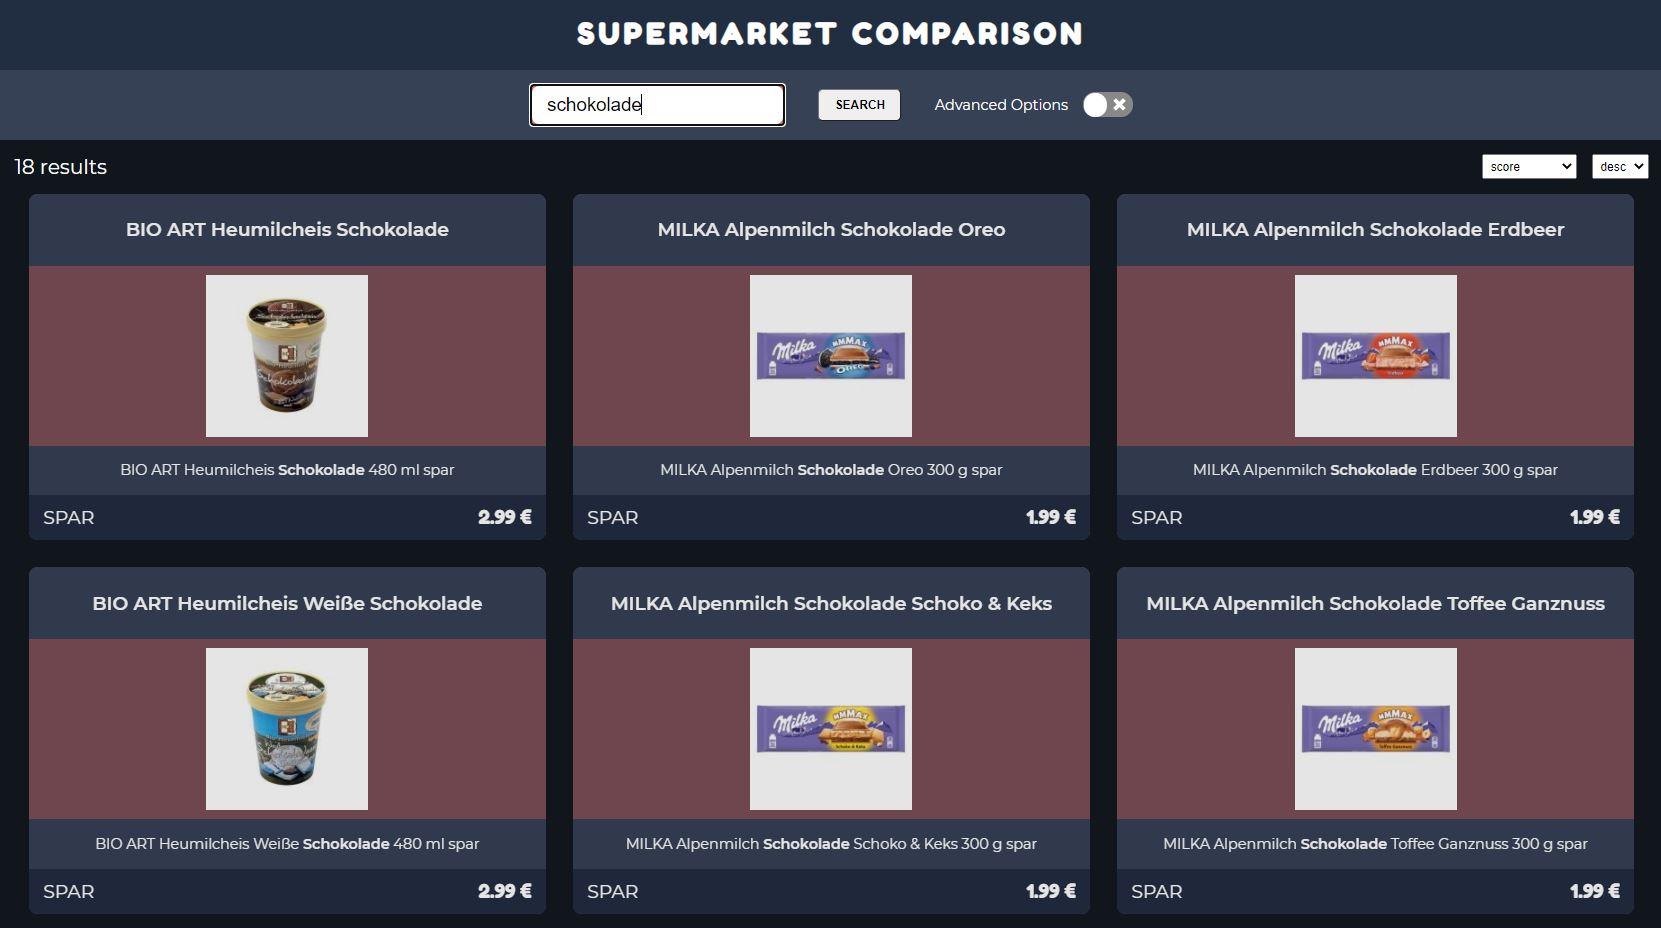 Project: Supermarket Comparision